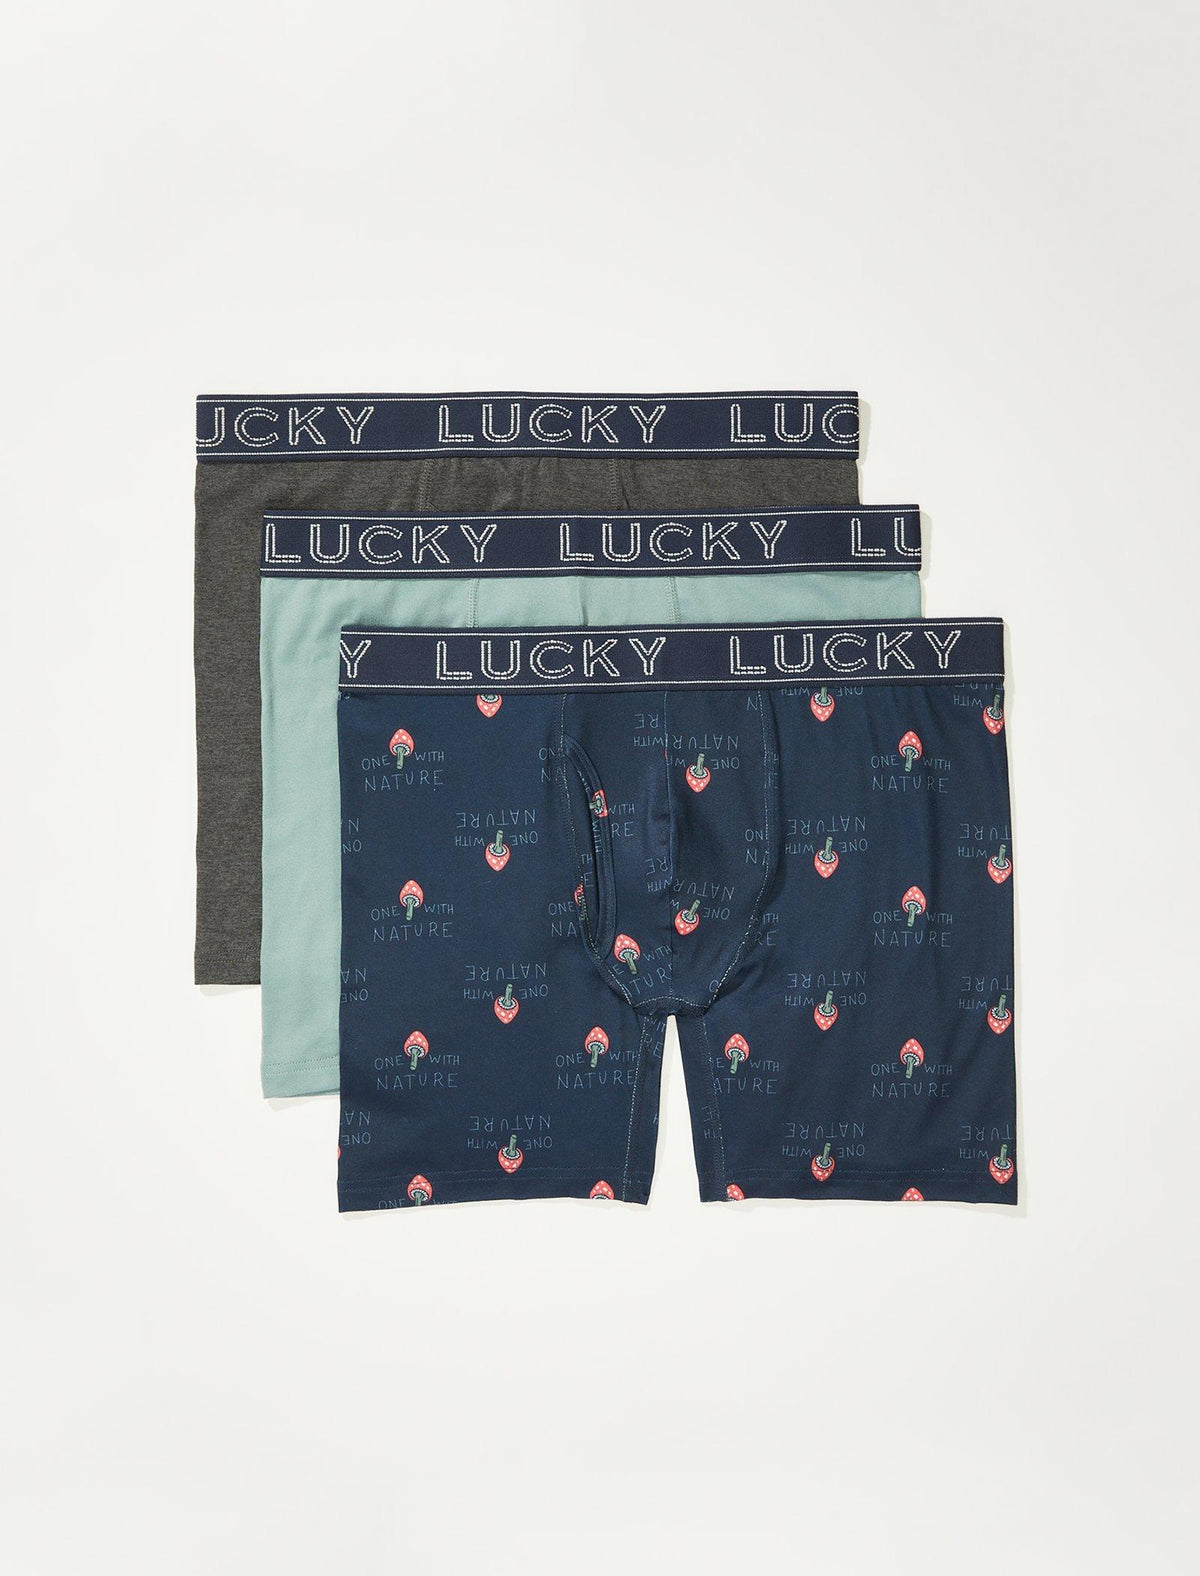 Lucky Brand Men's Cotton Boxer Briefs Underwear with Functional